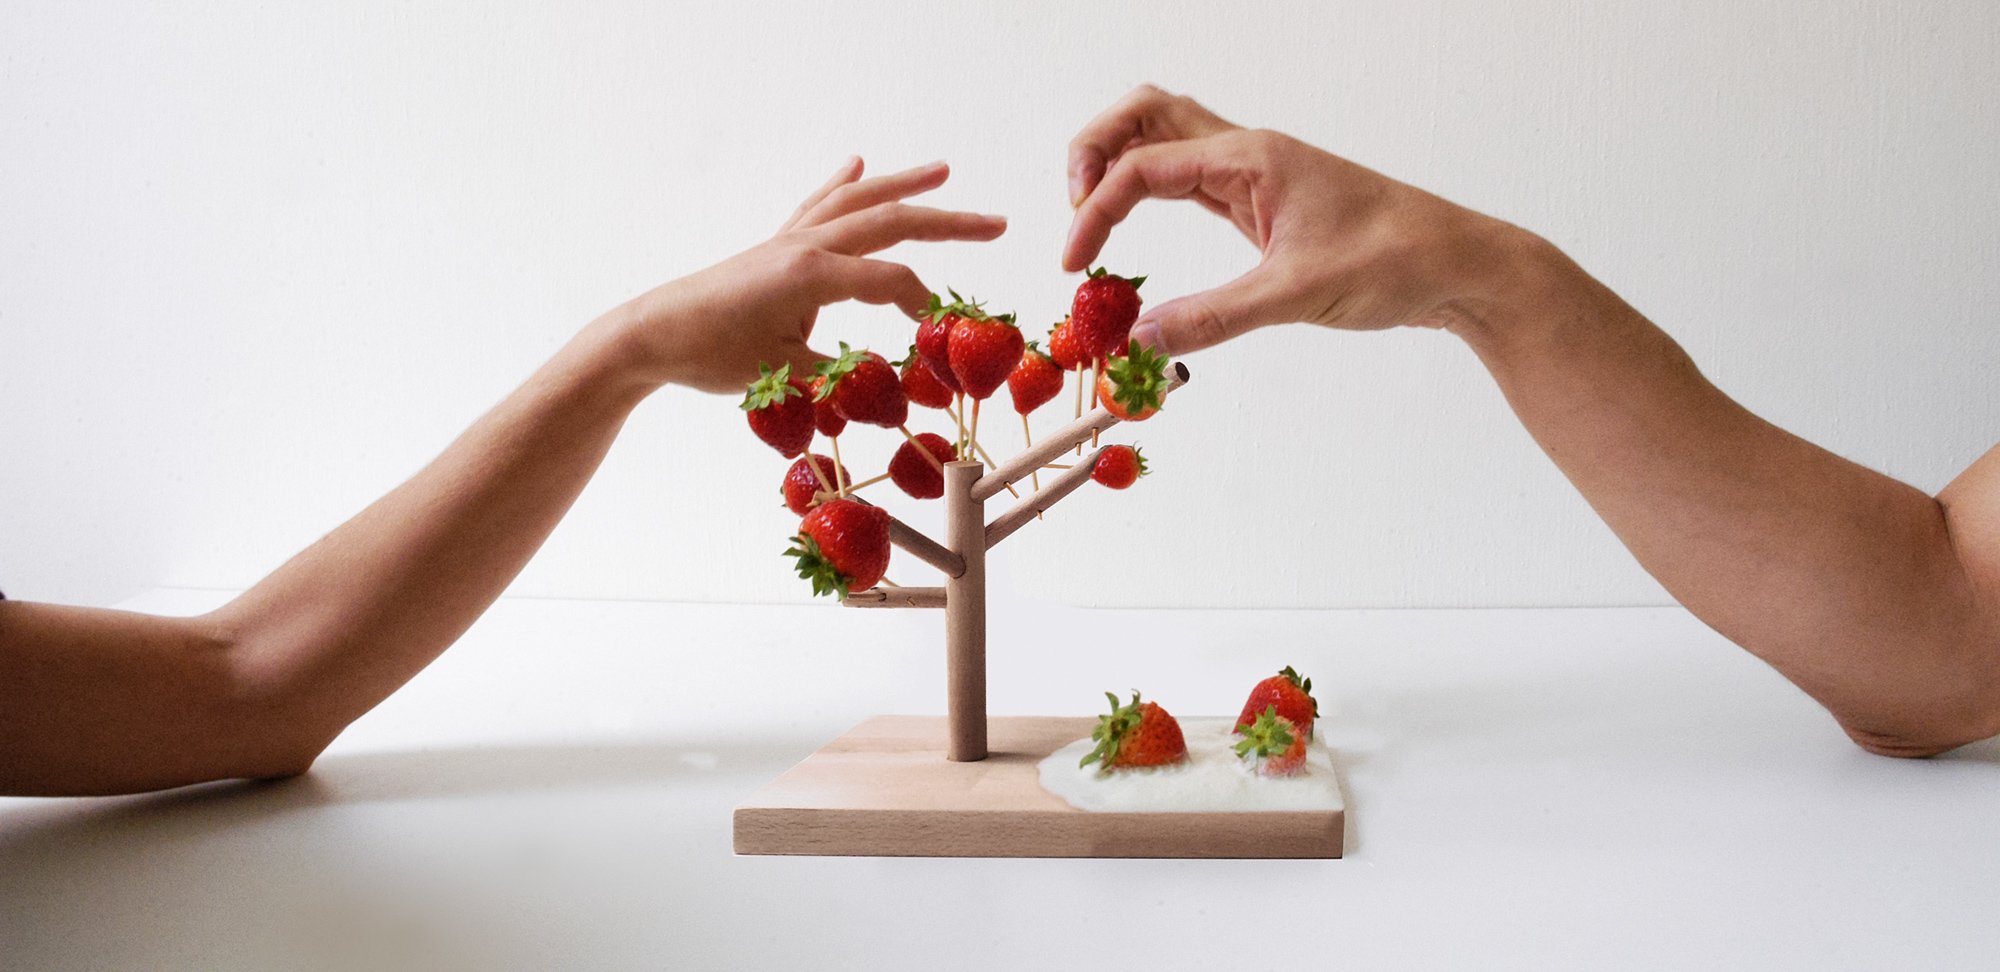 Eat from trees. Картинка женские руки фрукты стол.